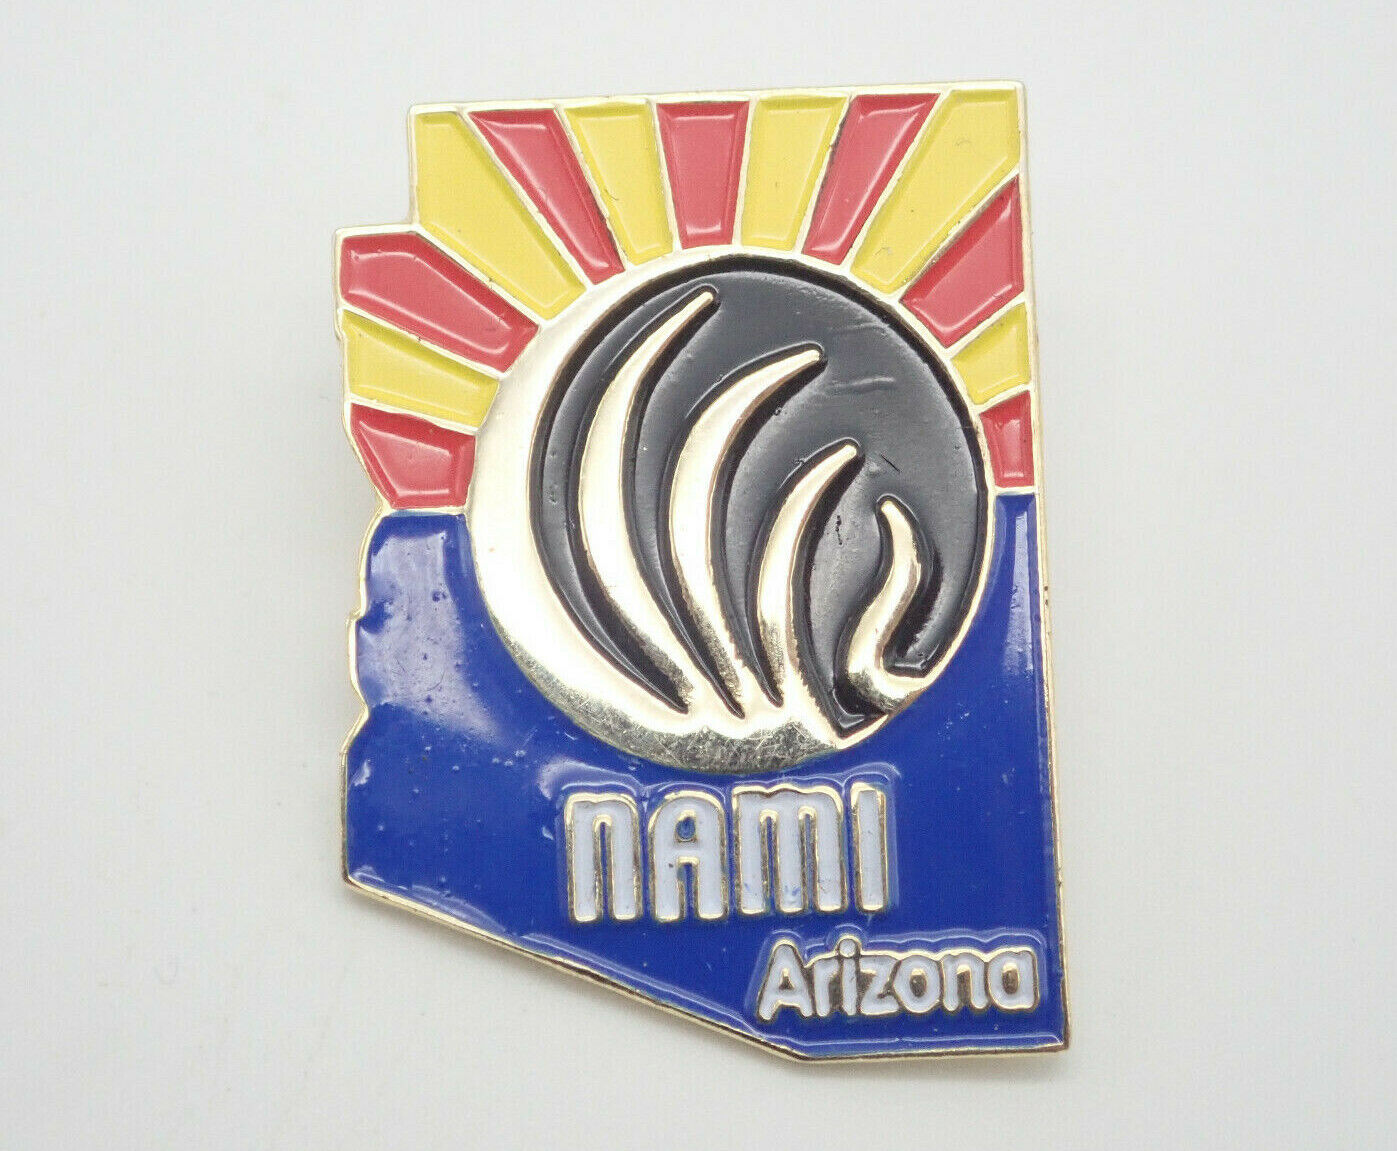 NAMI Arizona logo Vintage Lapel Pin